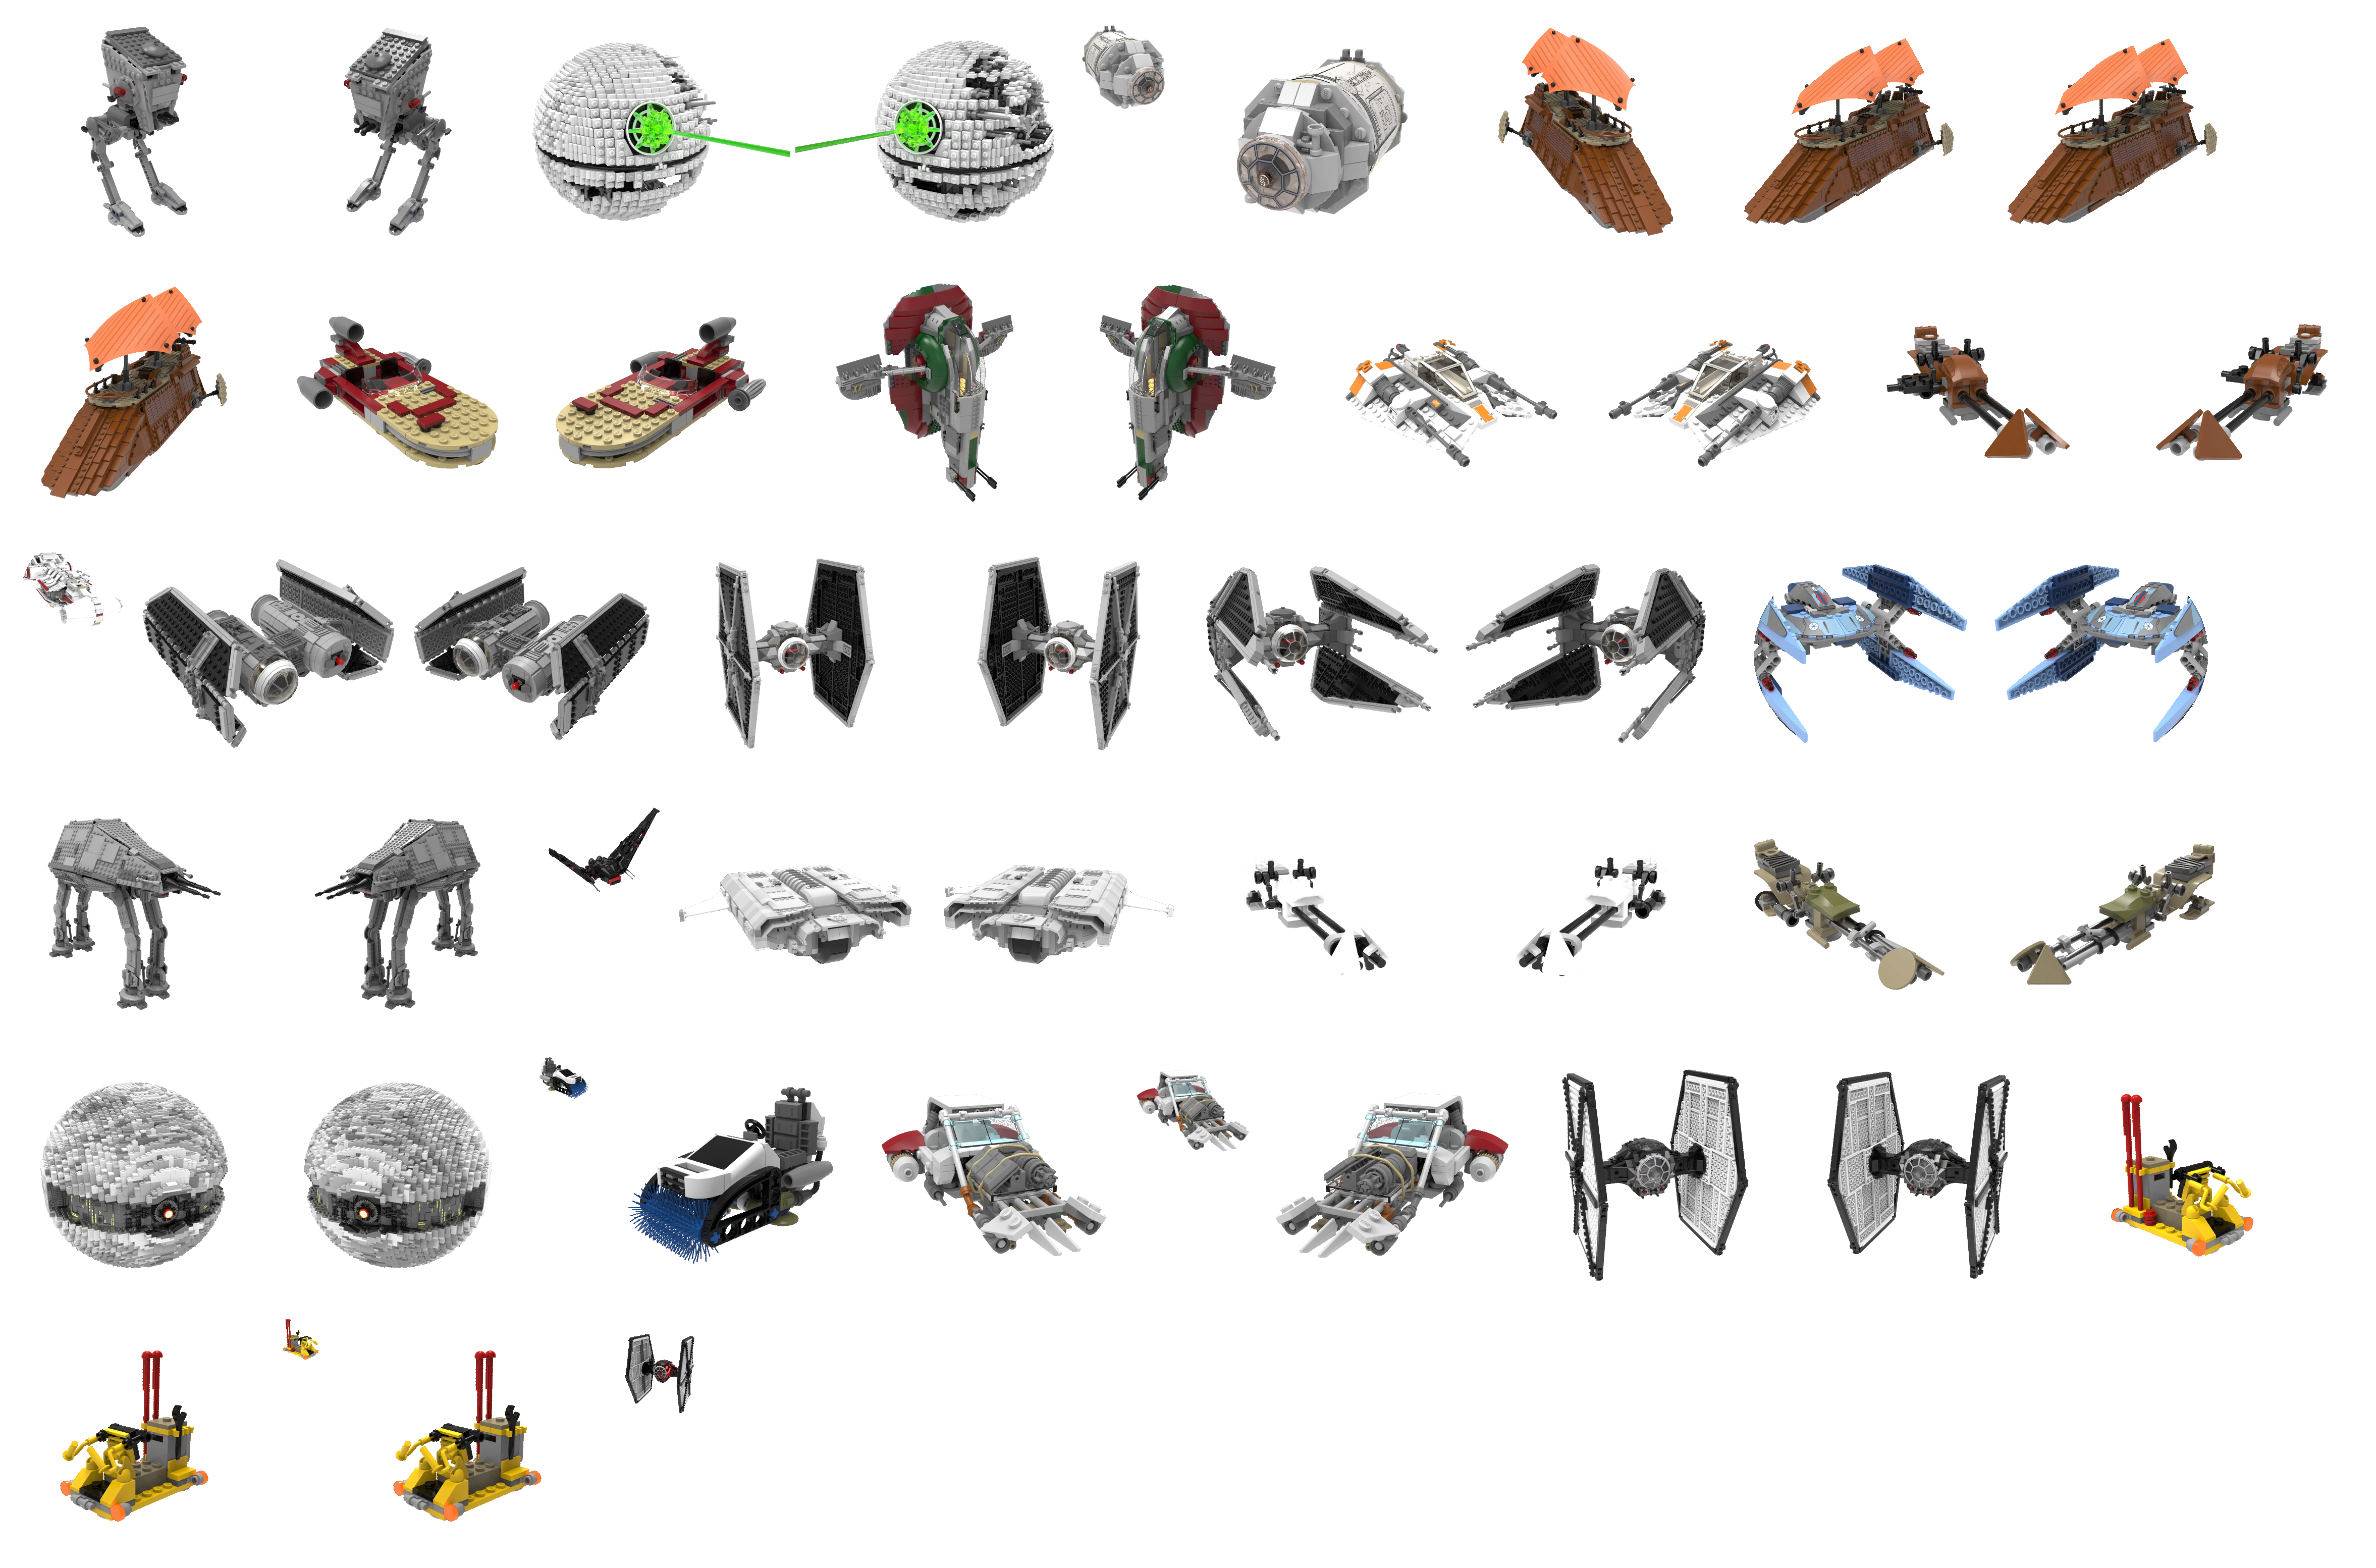 LEGO Star Wars: The Force Awakens - Vehicle Icons (Episodes)